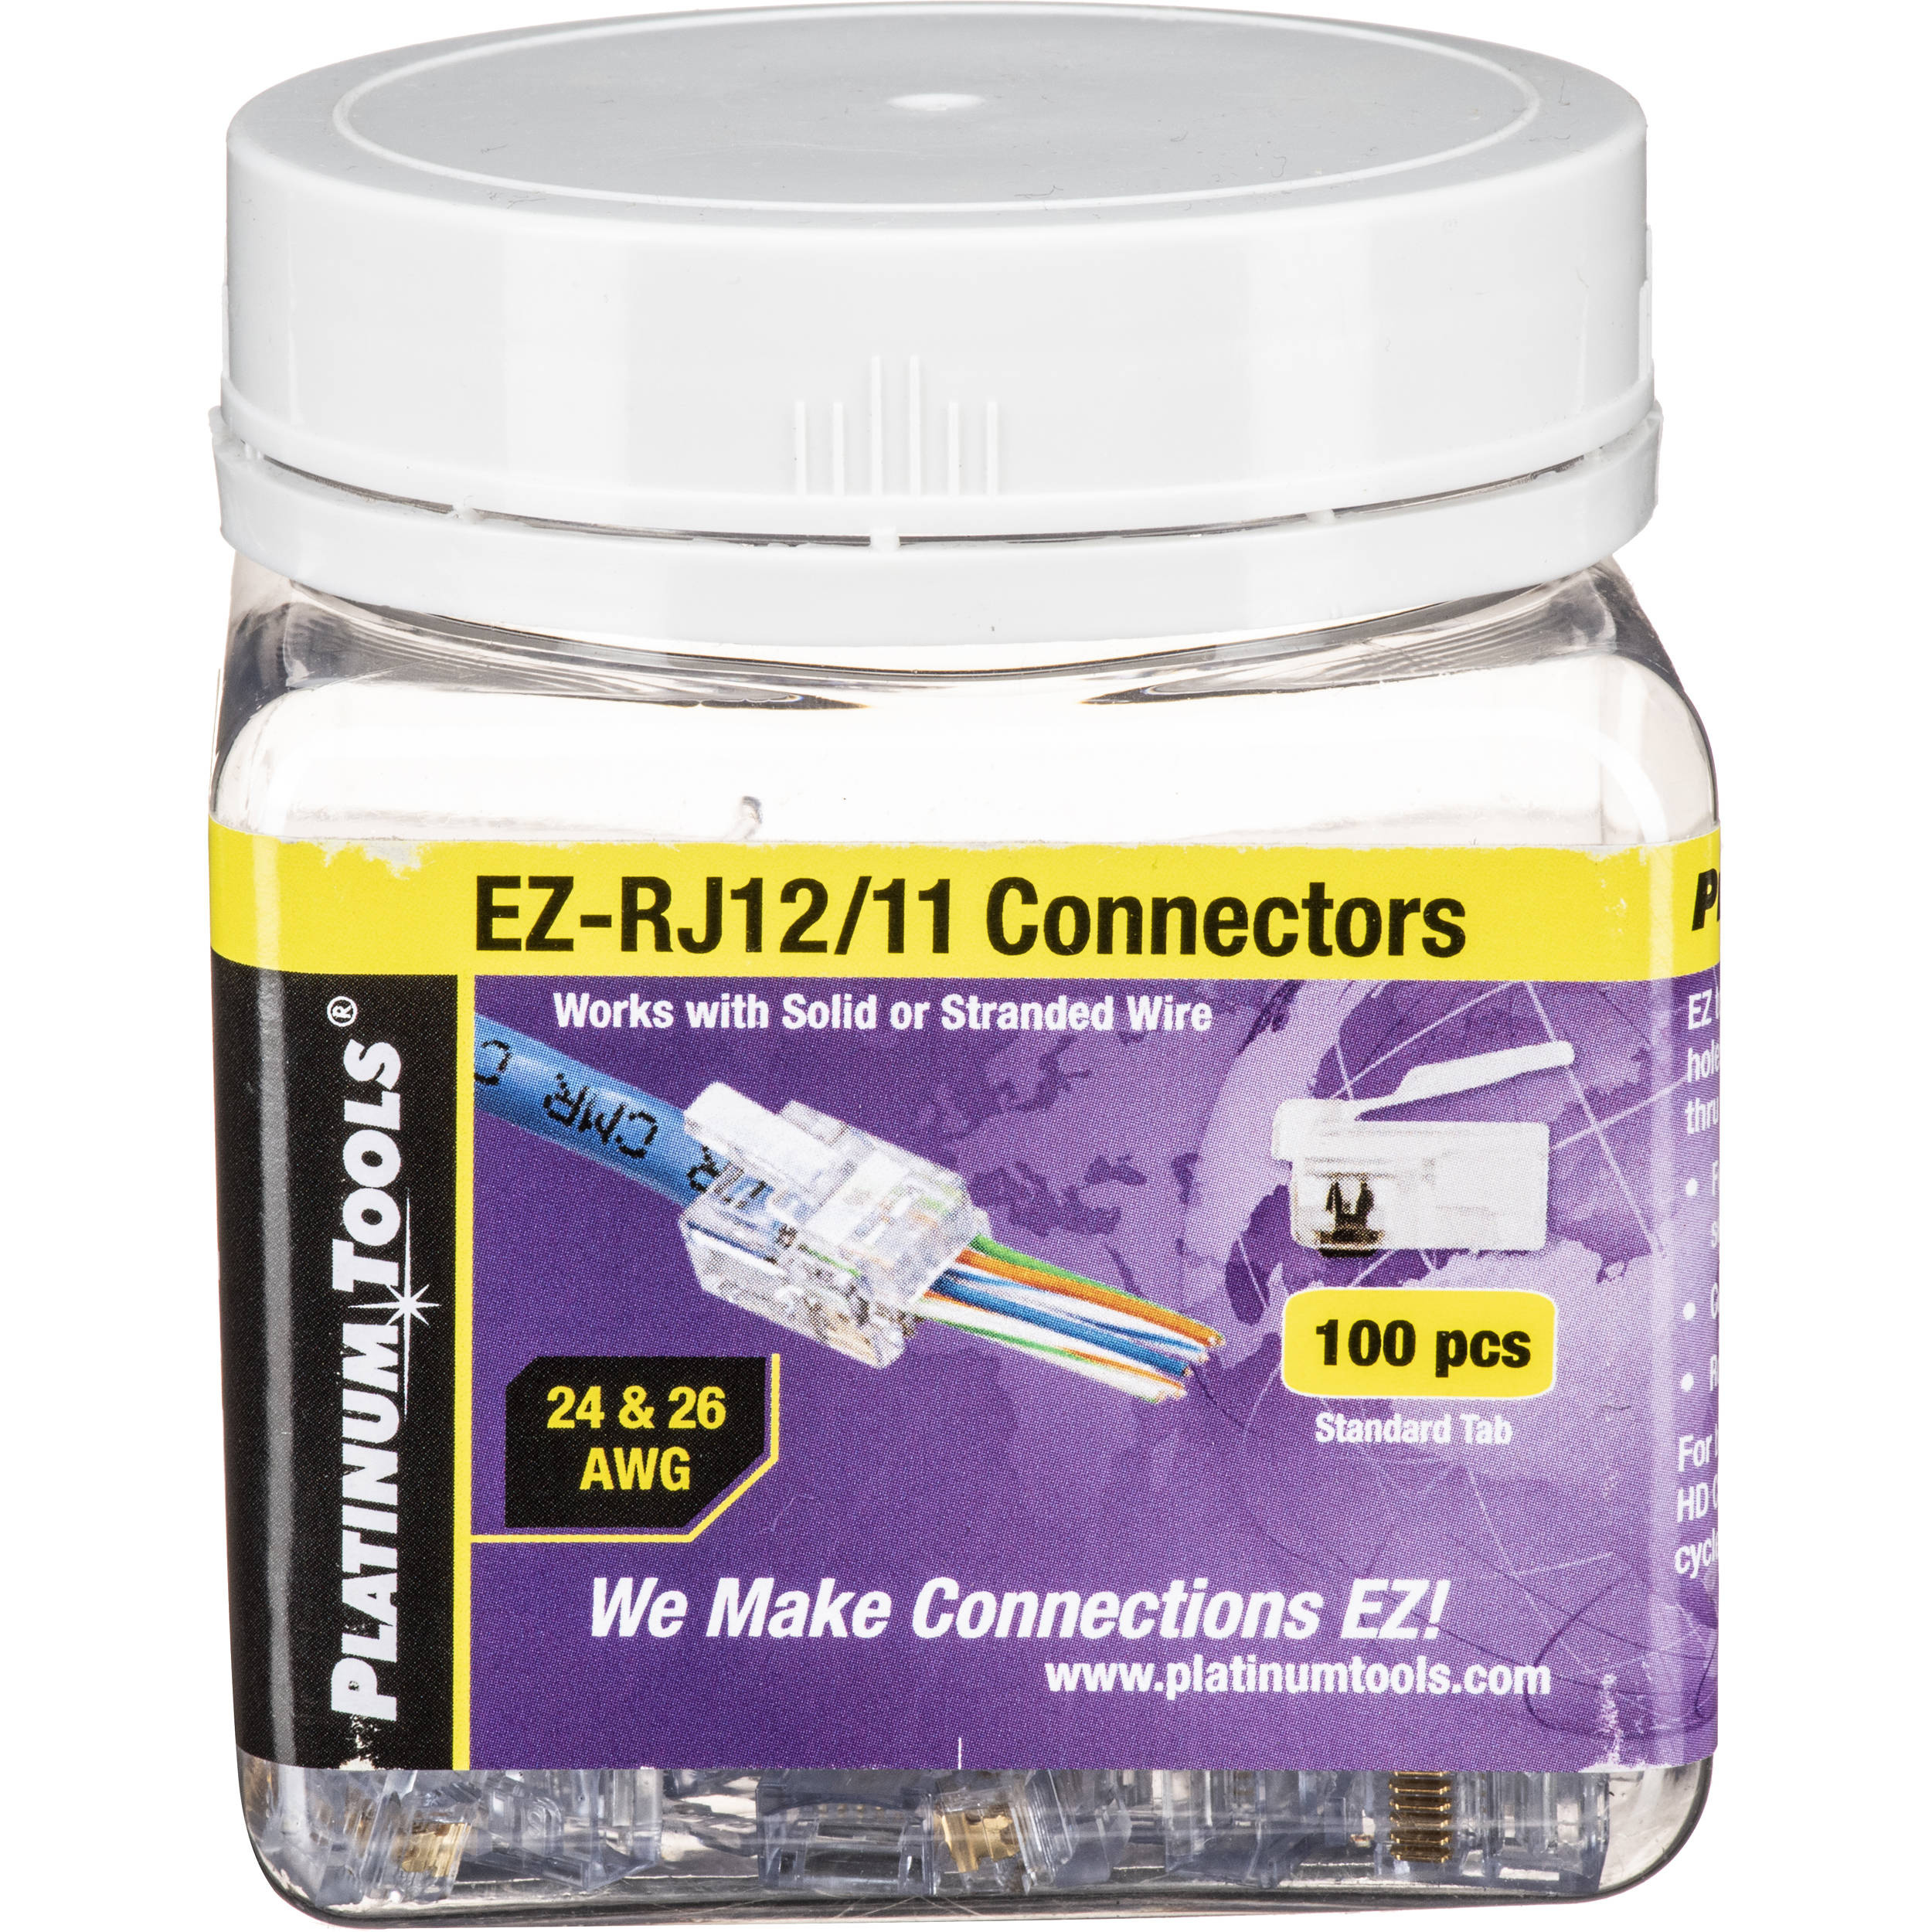 Platinum Tools EZ-RJ12/11 Connector with Standard Tab (Jar, 100-Pieces)